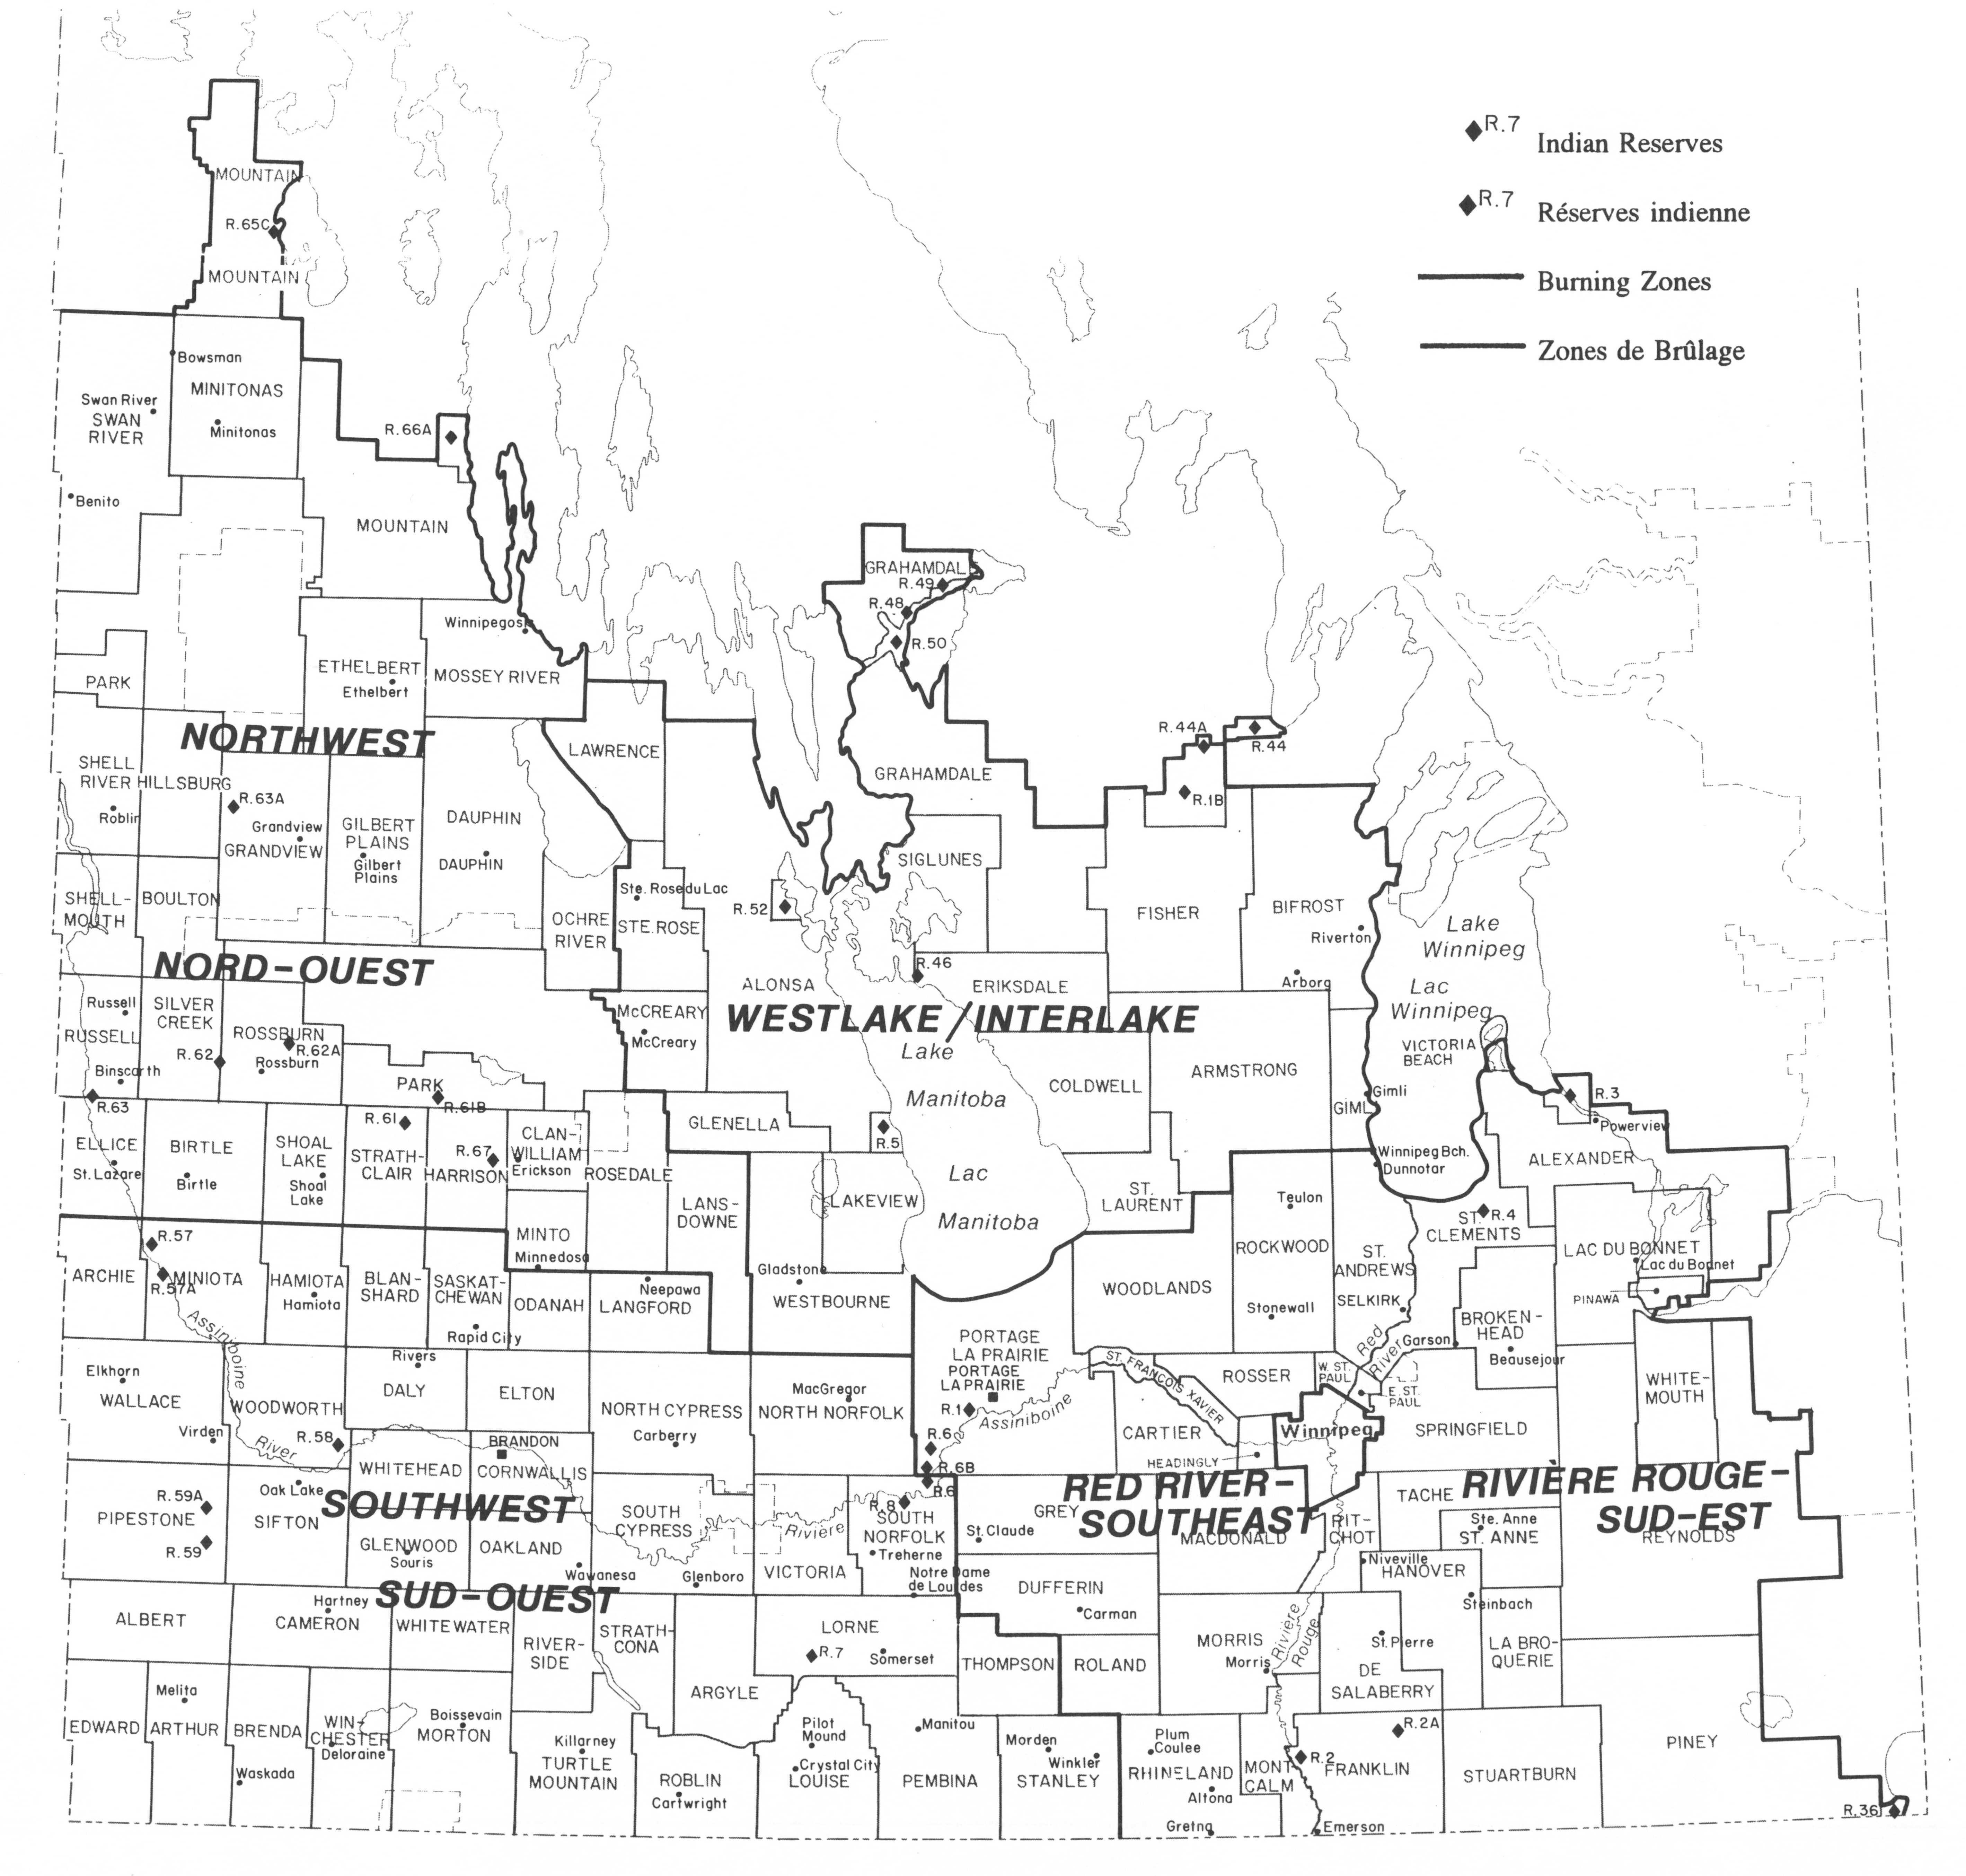 map of municipalities and burning zones